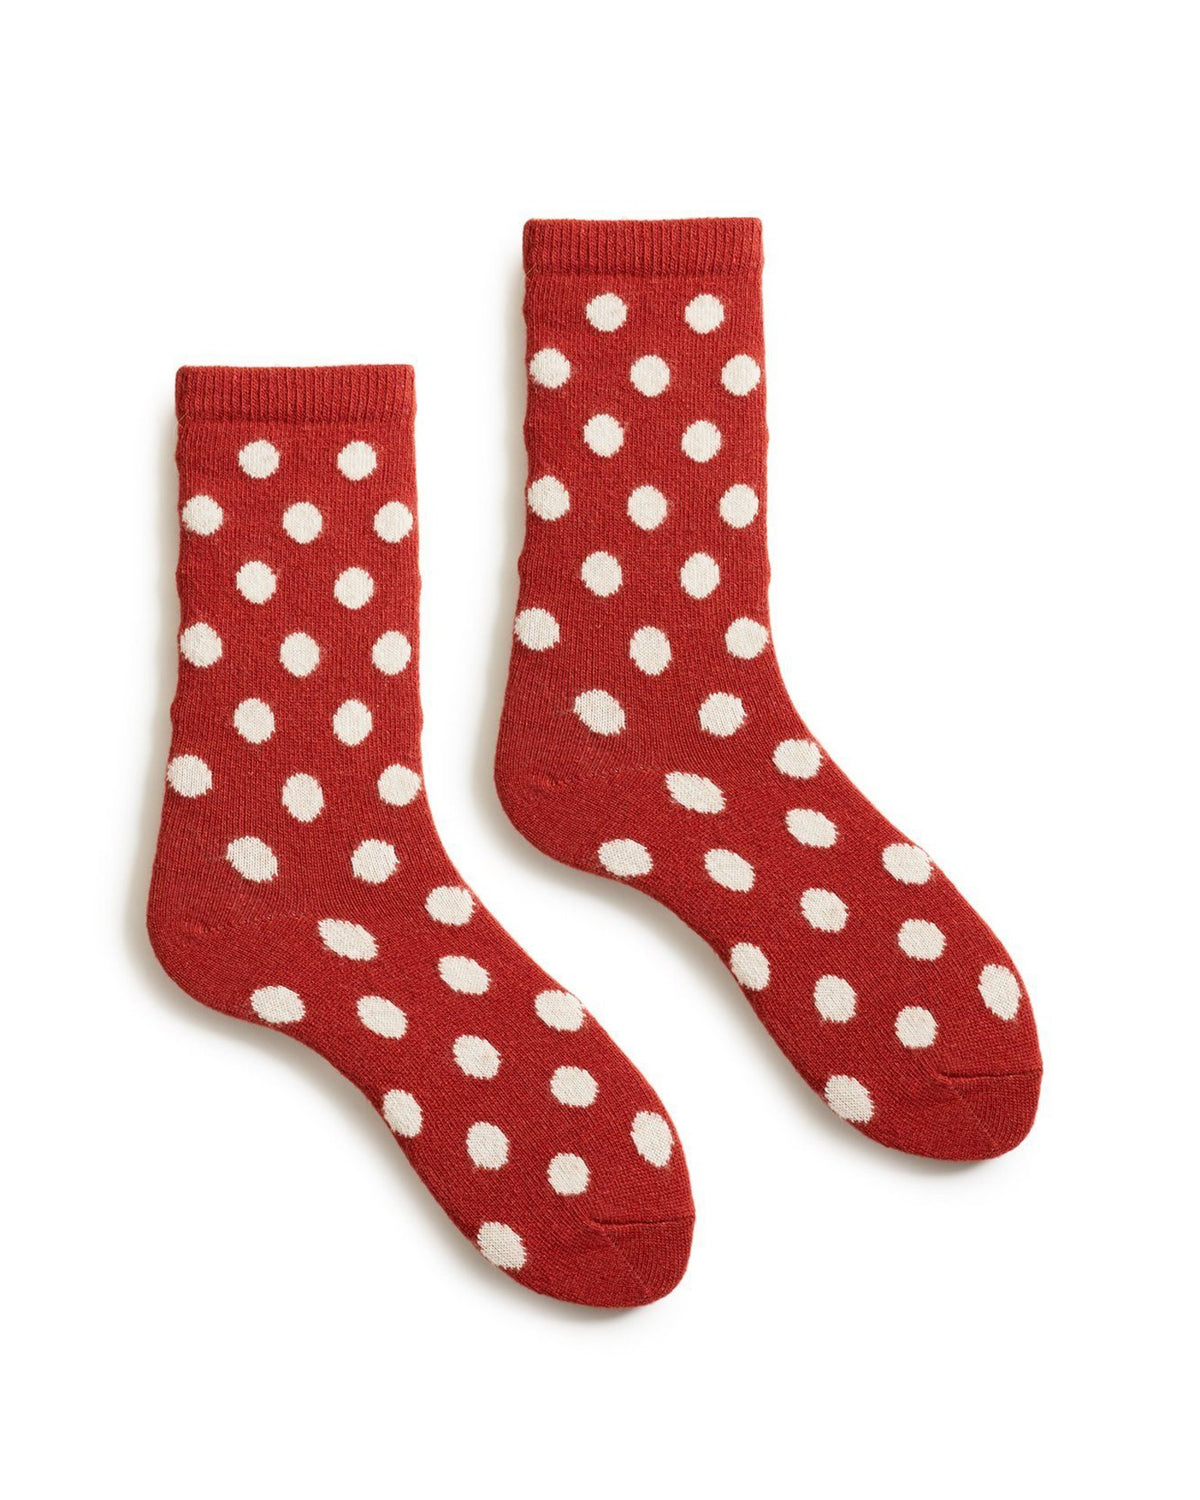 lisa b. Accessories Spice Dot Socks in Spice